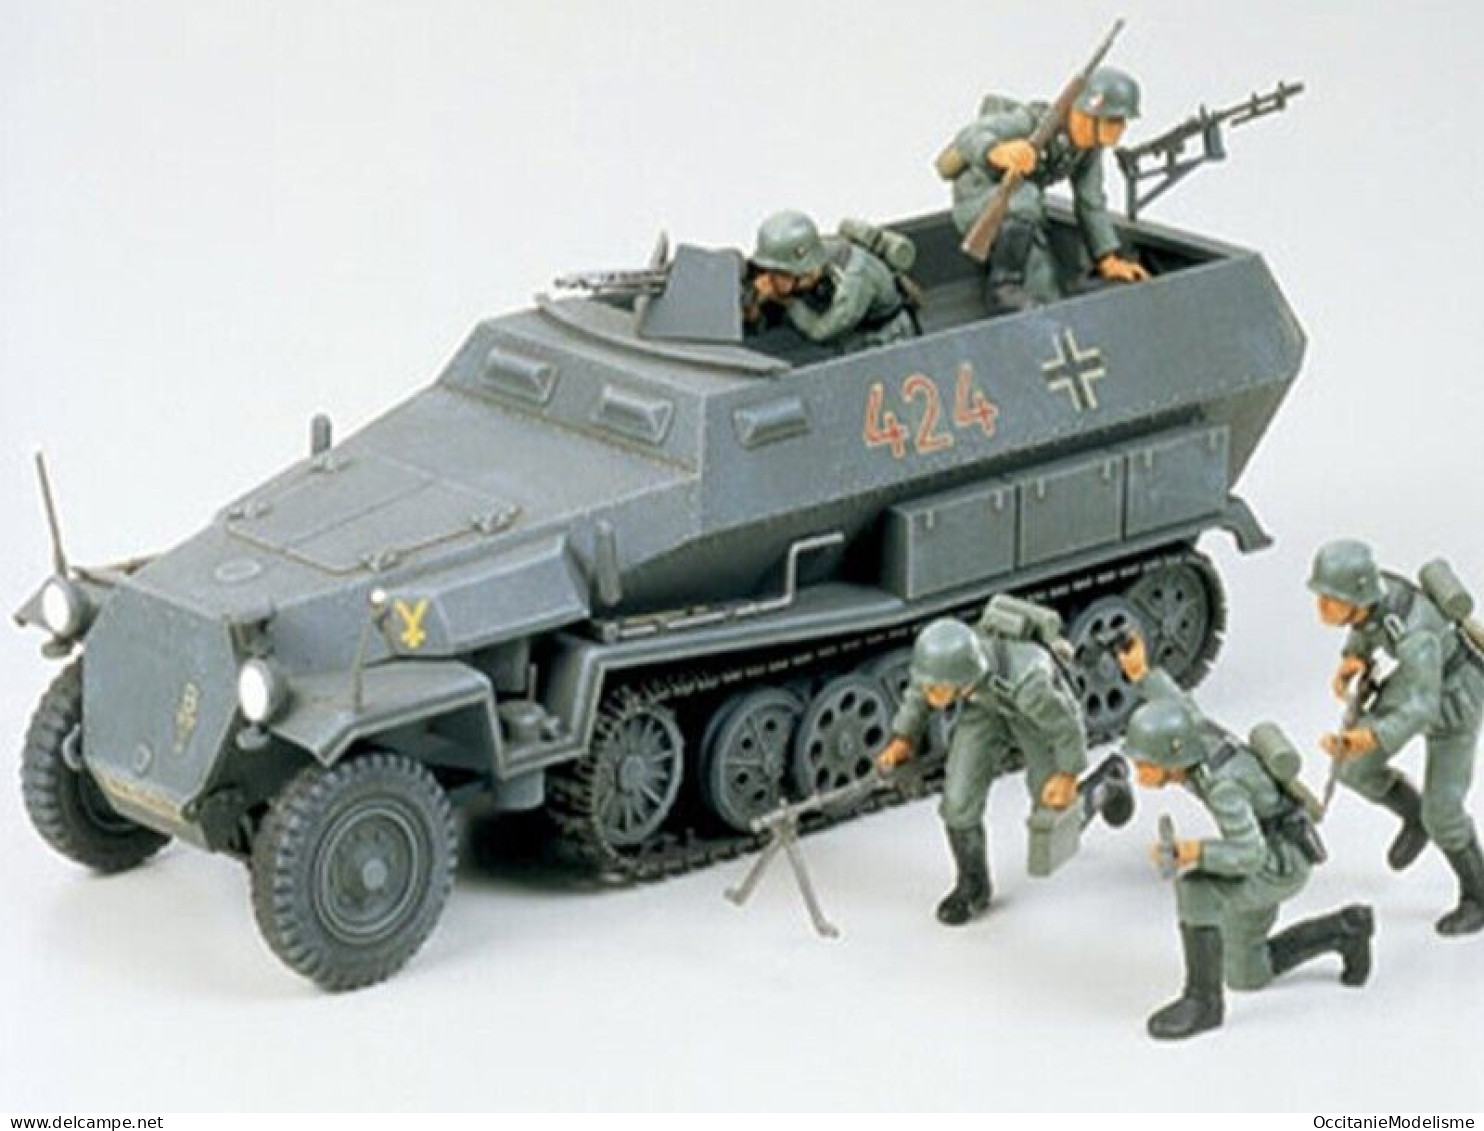 Tamiya - HANOMAG Sdkfz 251/1 + 5 Figurines WWII Militaire Maquette Kit Plastique Réf. 35020 BO 1/35 - Militär